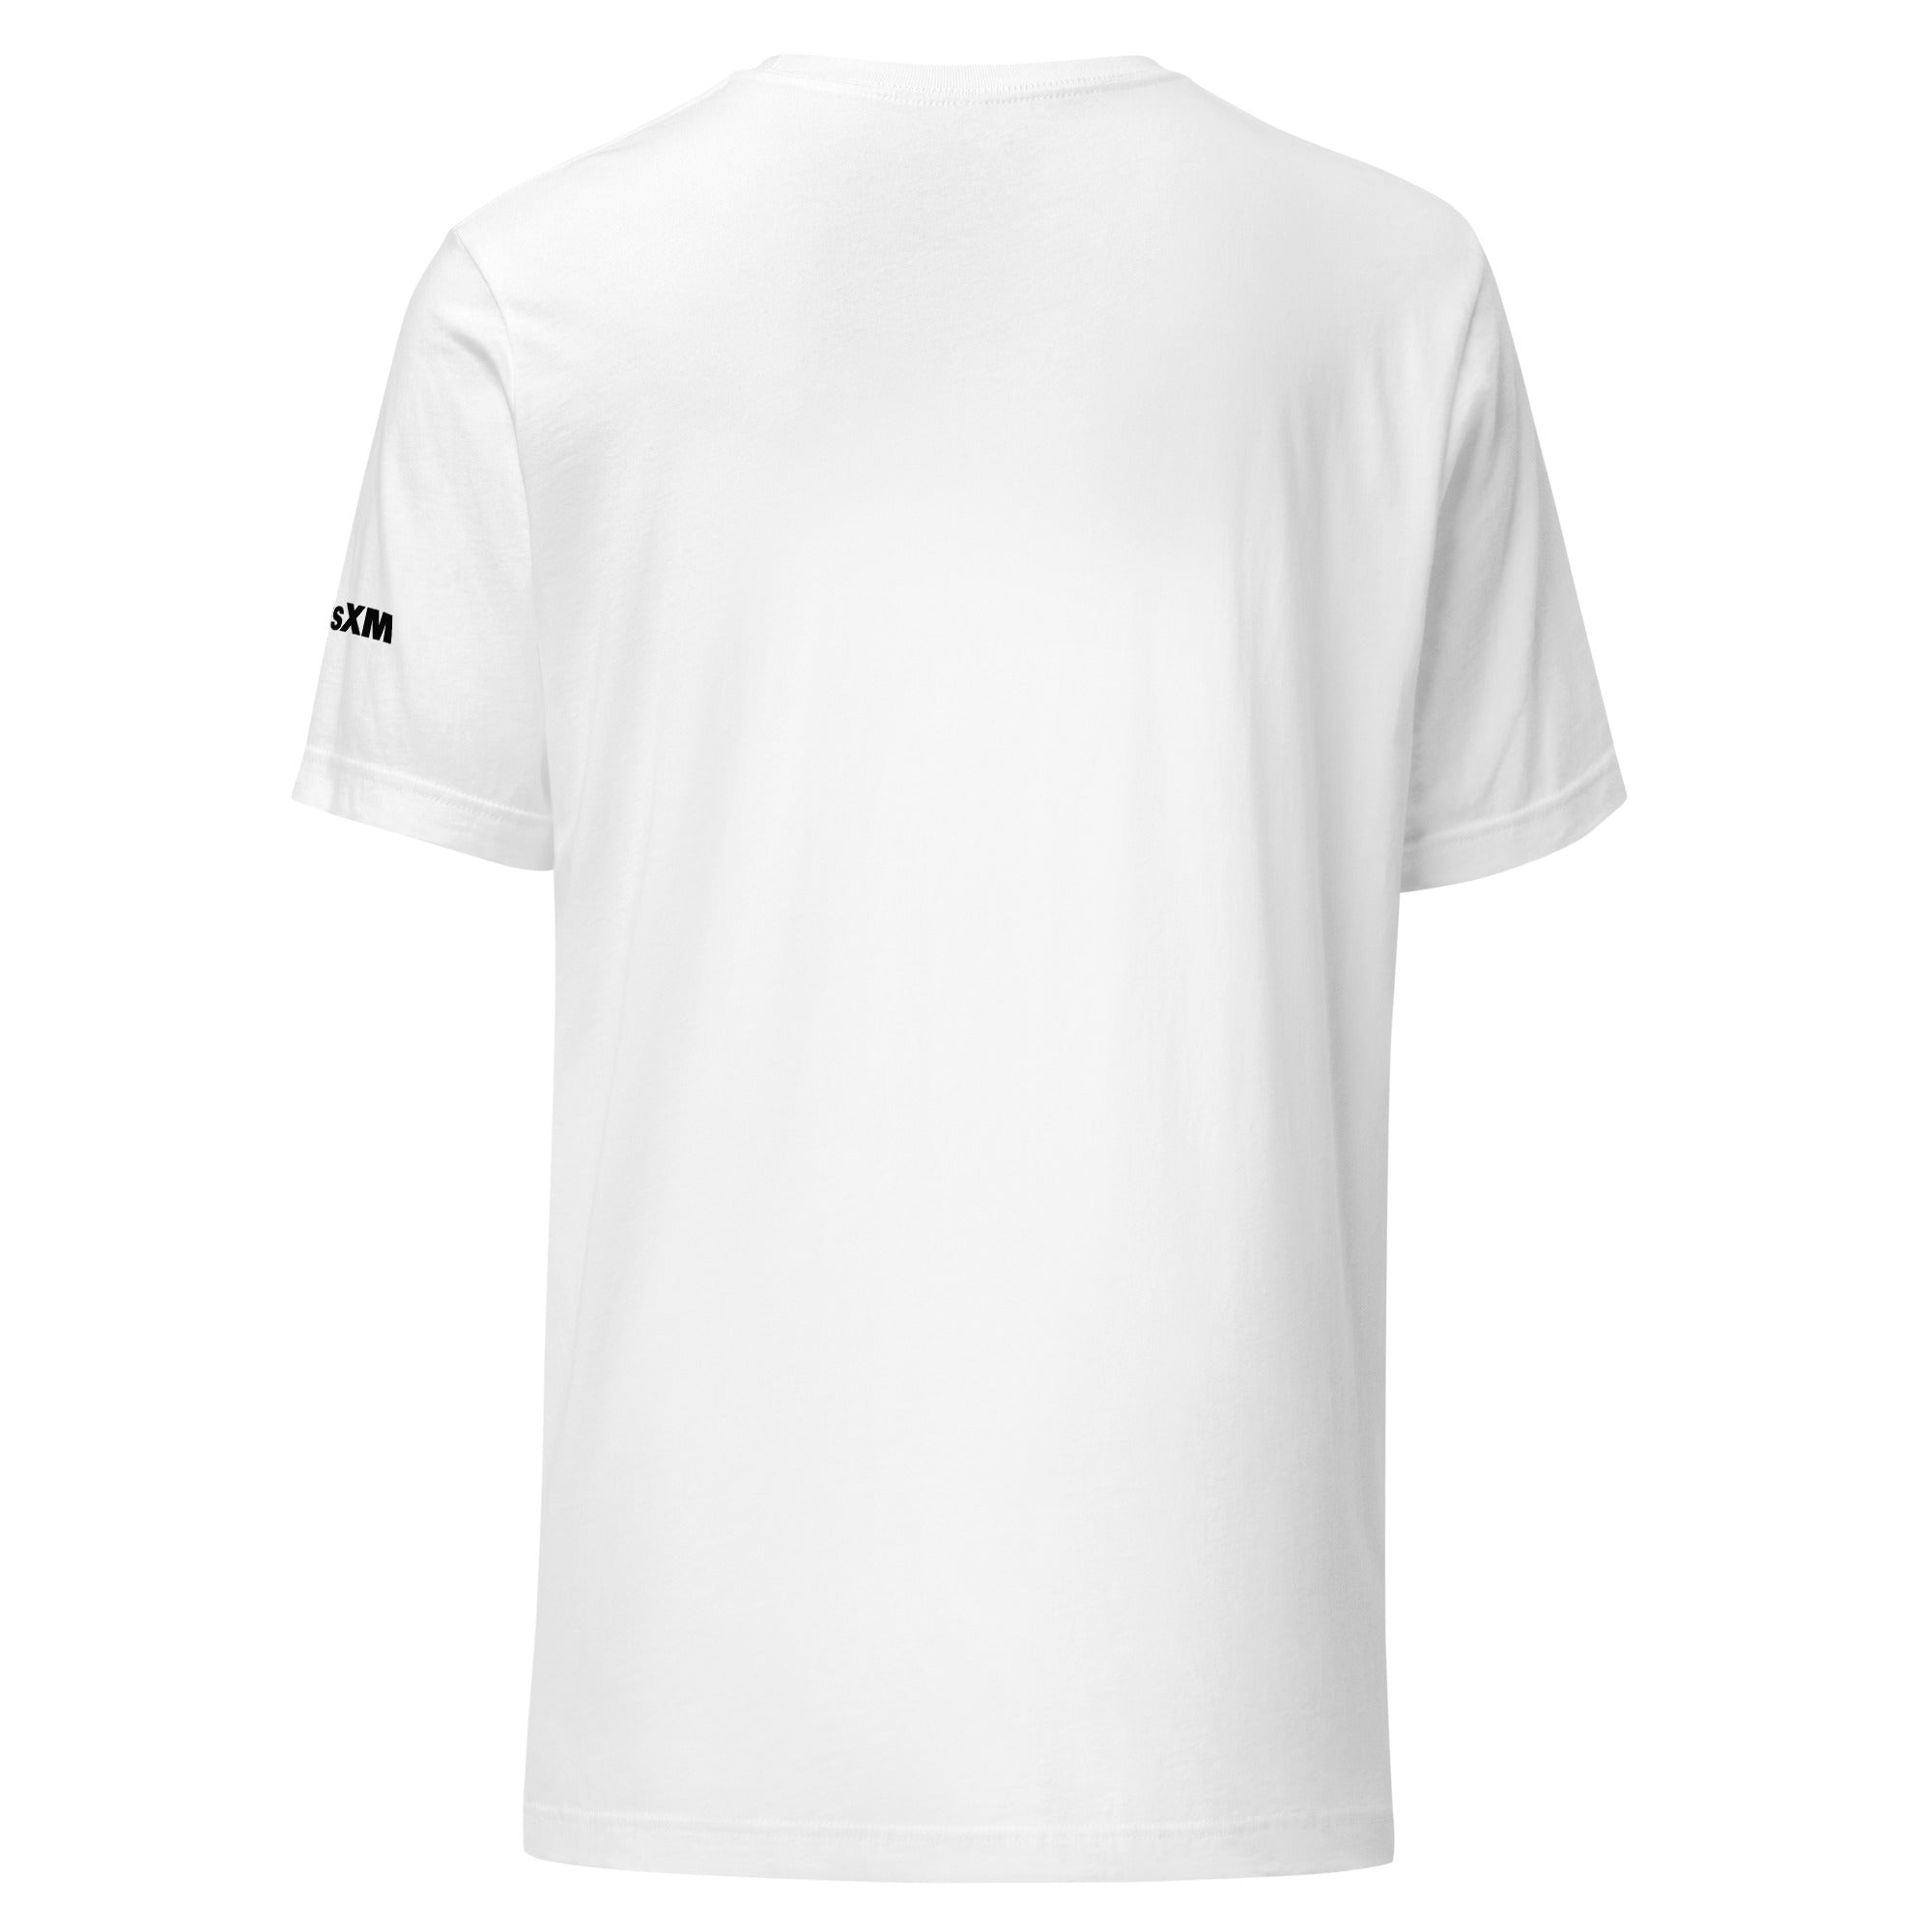 The Spectrum: T-shirt (White)